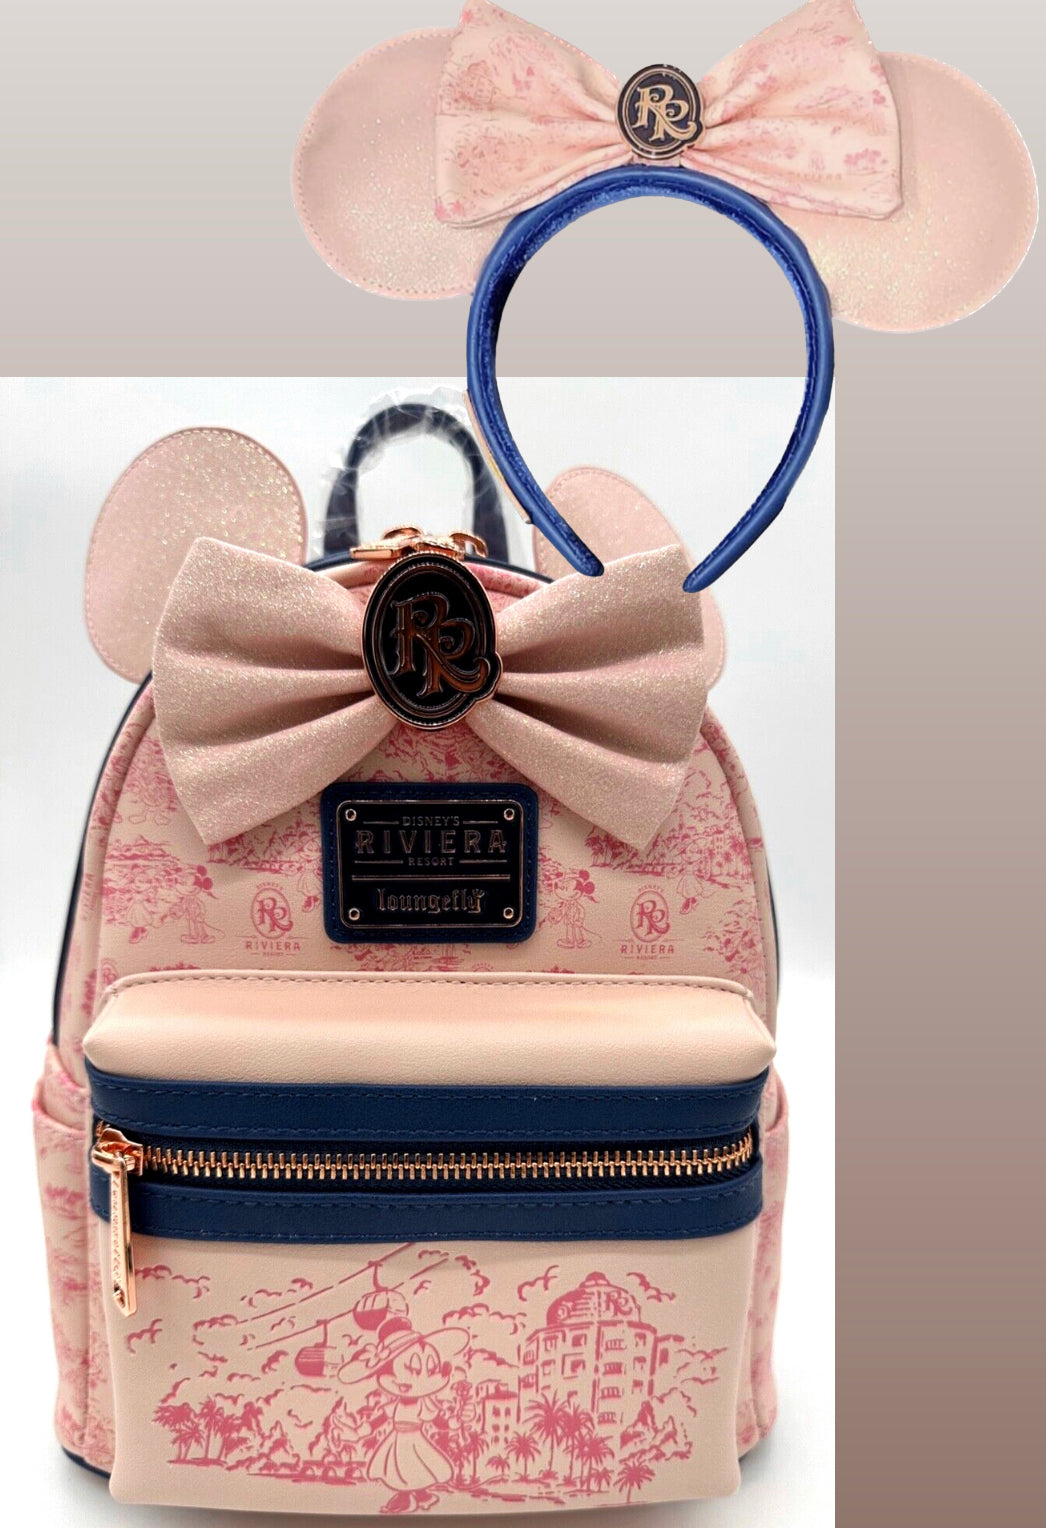 Disney's Riviera Resort Loungefly bag and Riviera Resort Ears